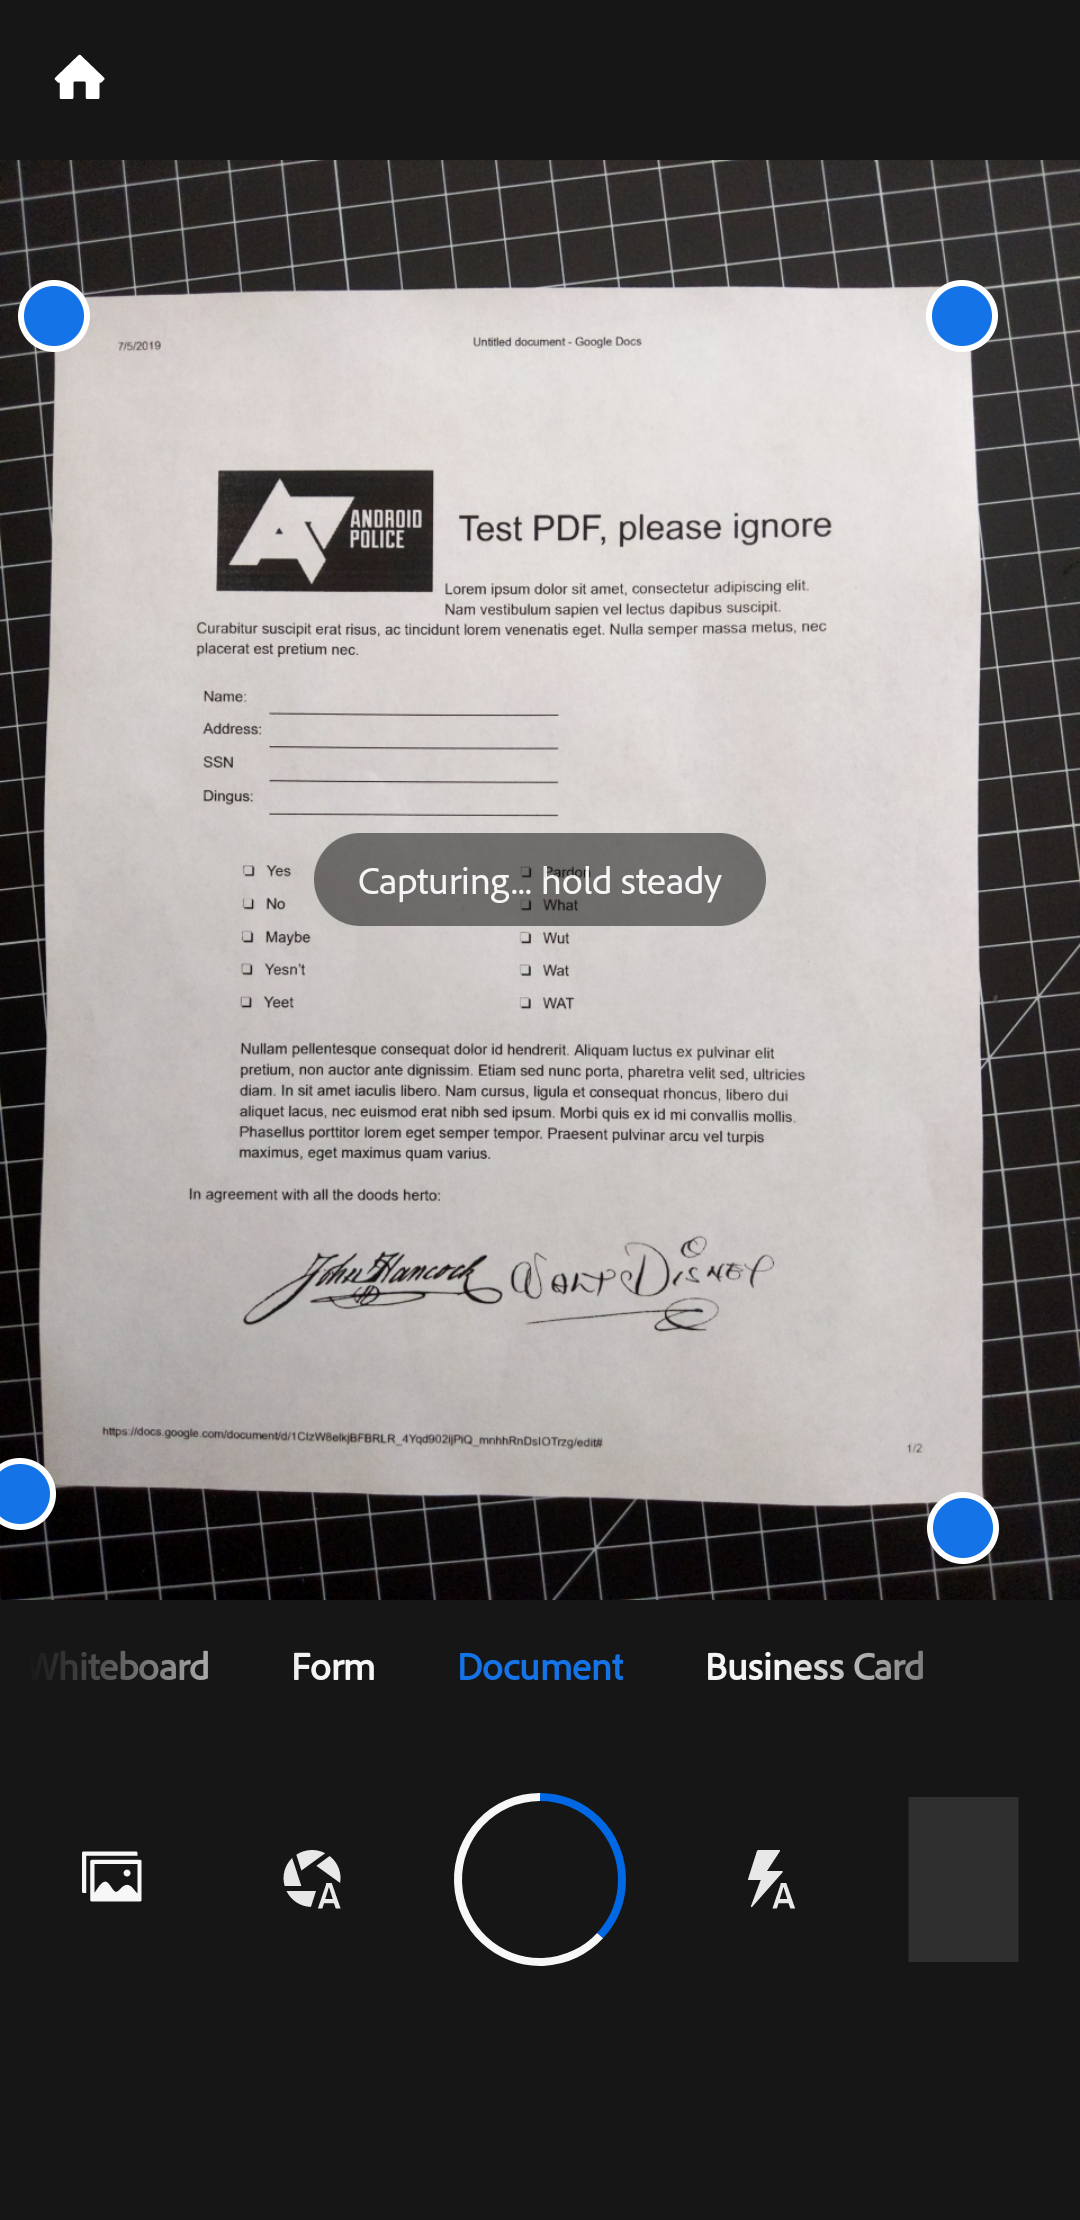 scanning app showing document on black background